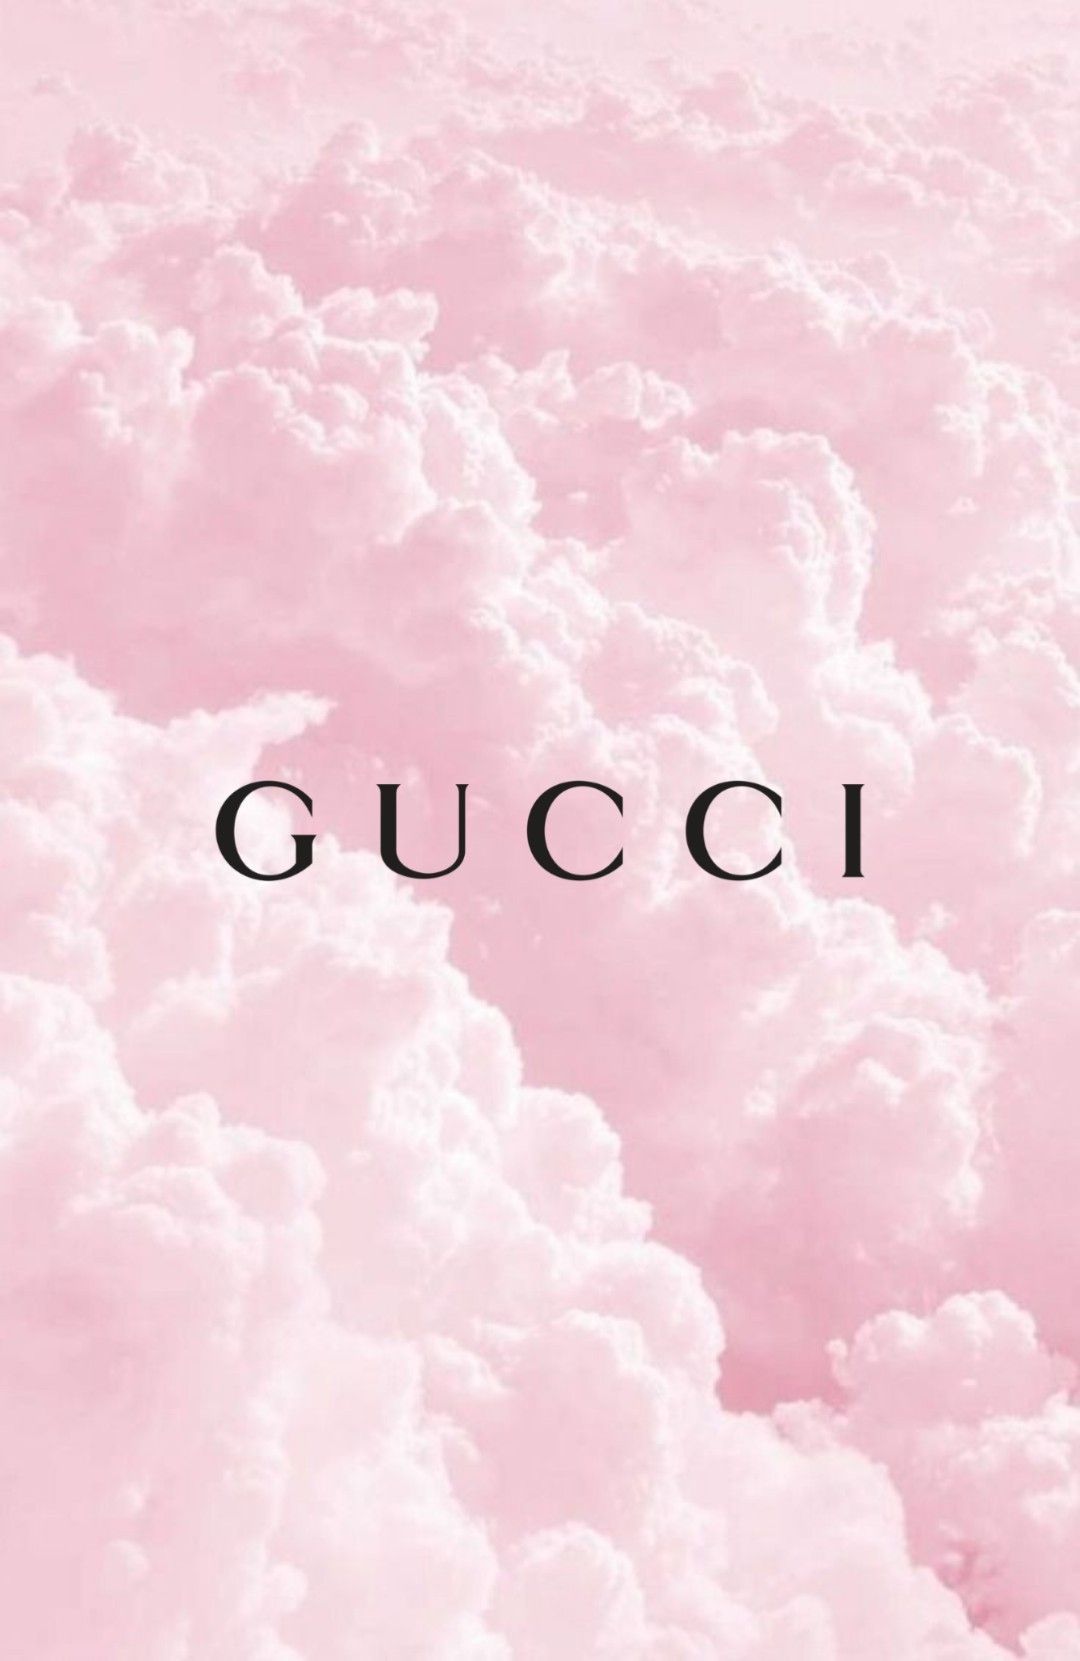 Gucci, Hype, Wallpaper, Clouds. Hype wallpaper, iPhone wallpaper